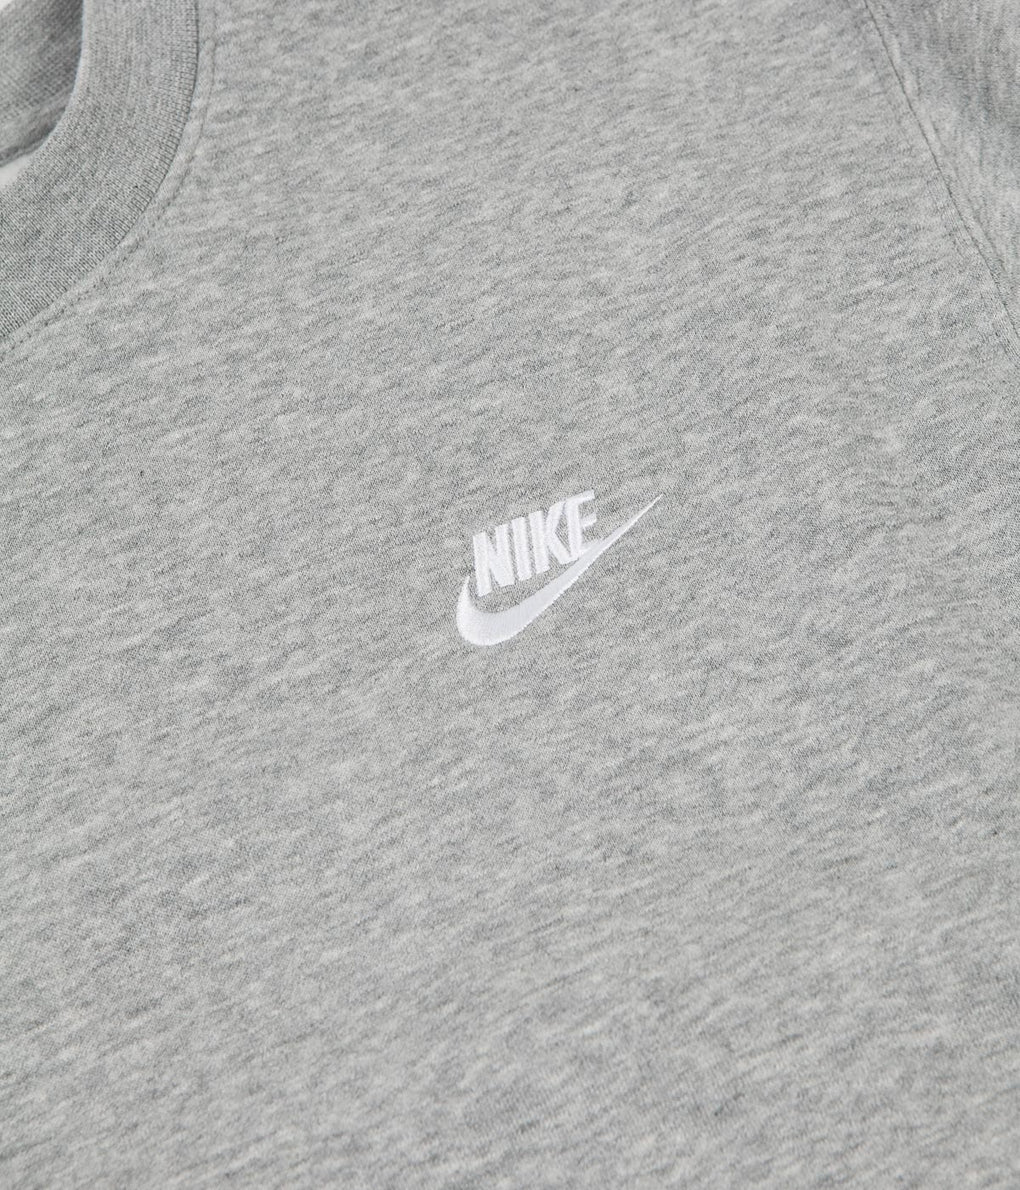 Nike Club Crewneck Sweatshirt - Dark Grey Heather / White | Always in ...